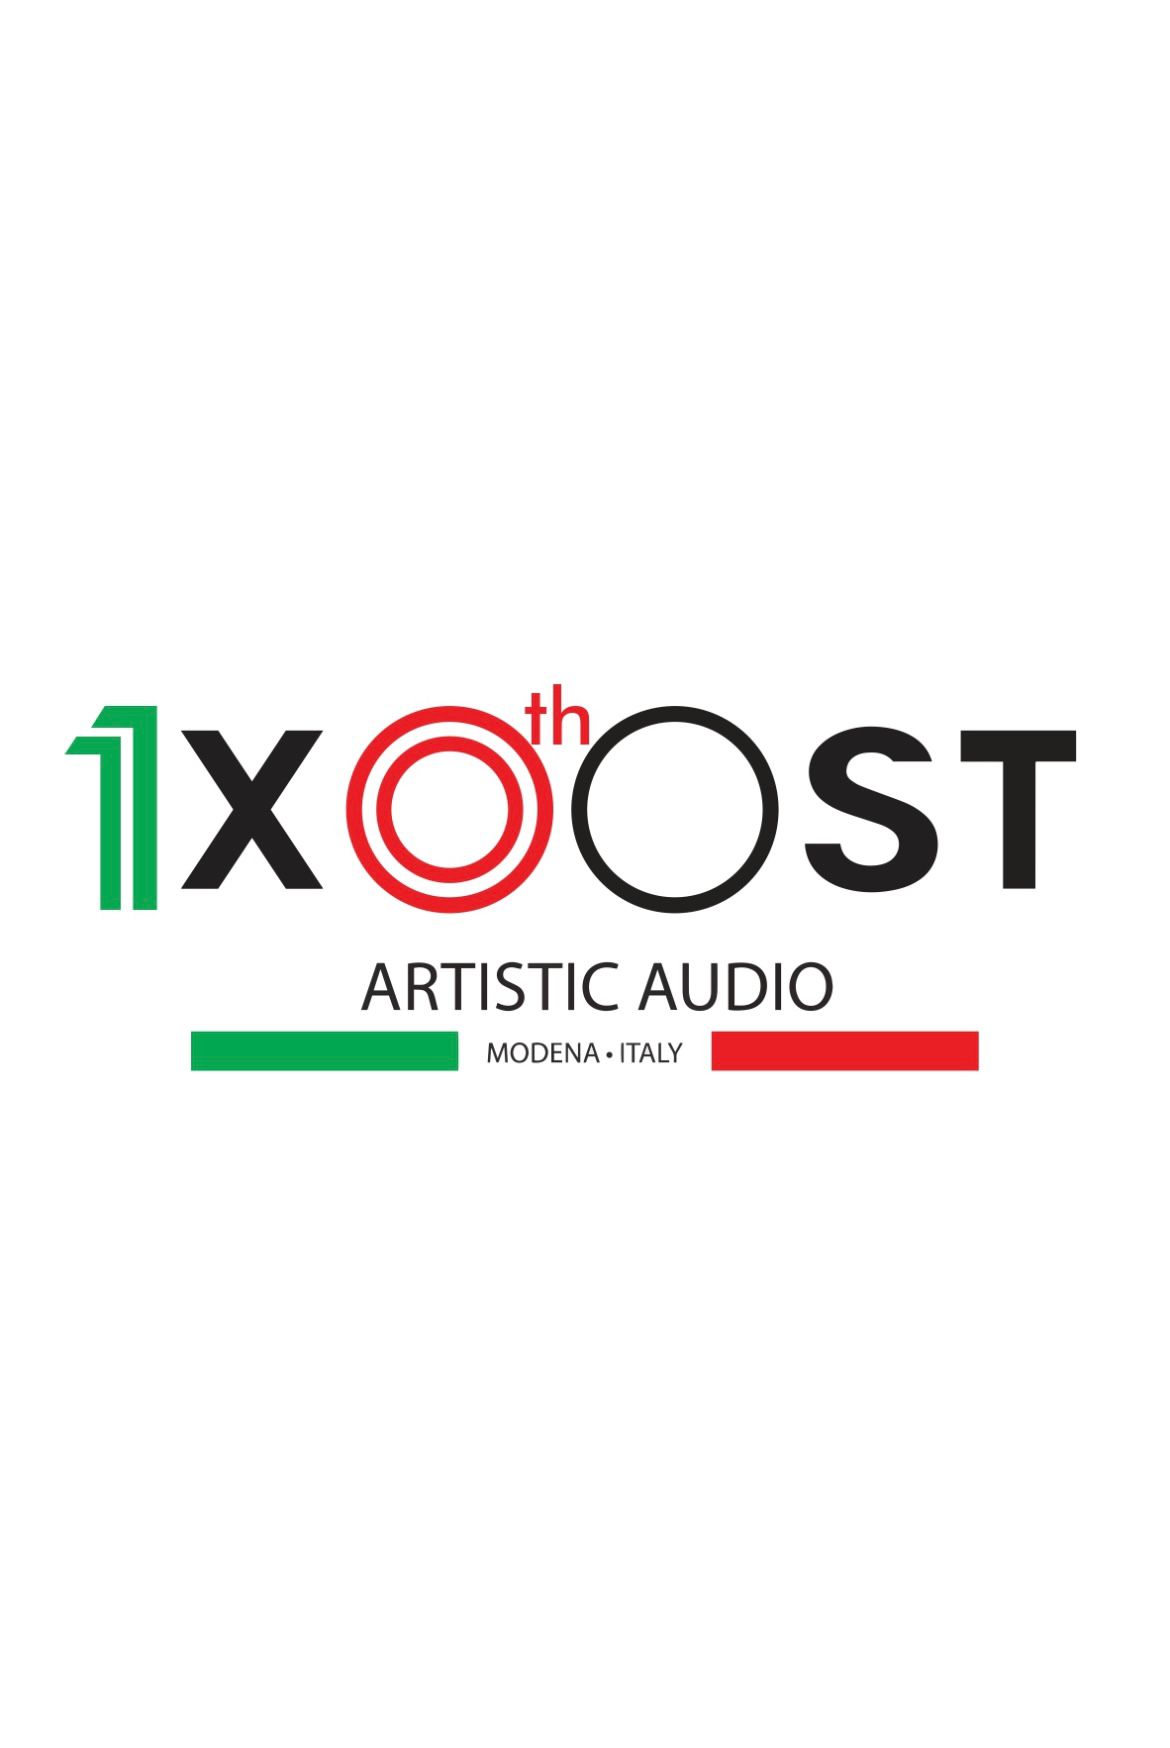 Decimo anniversario iXOOST